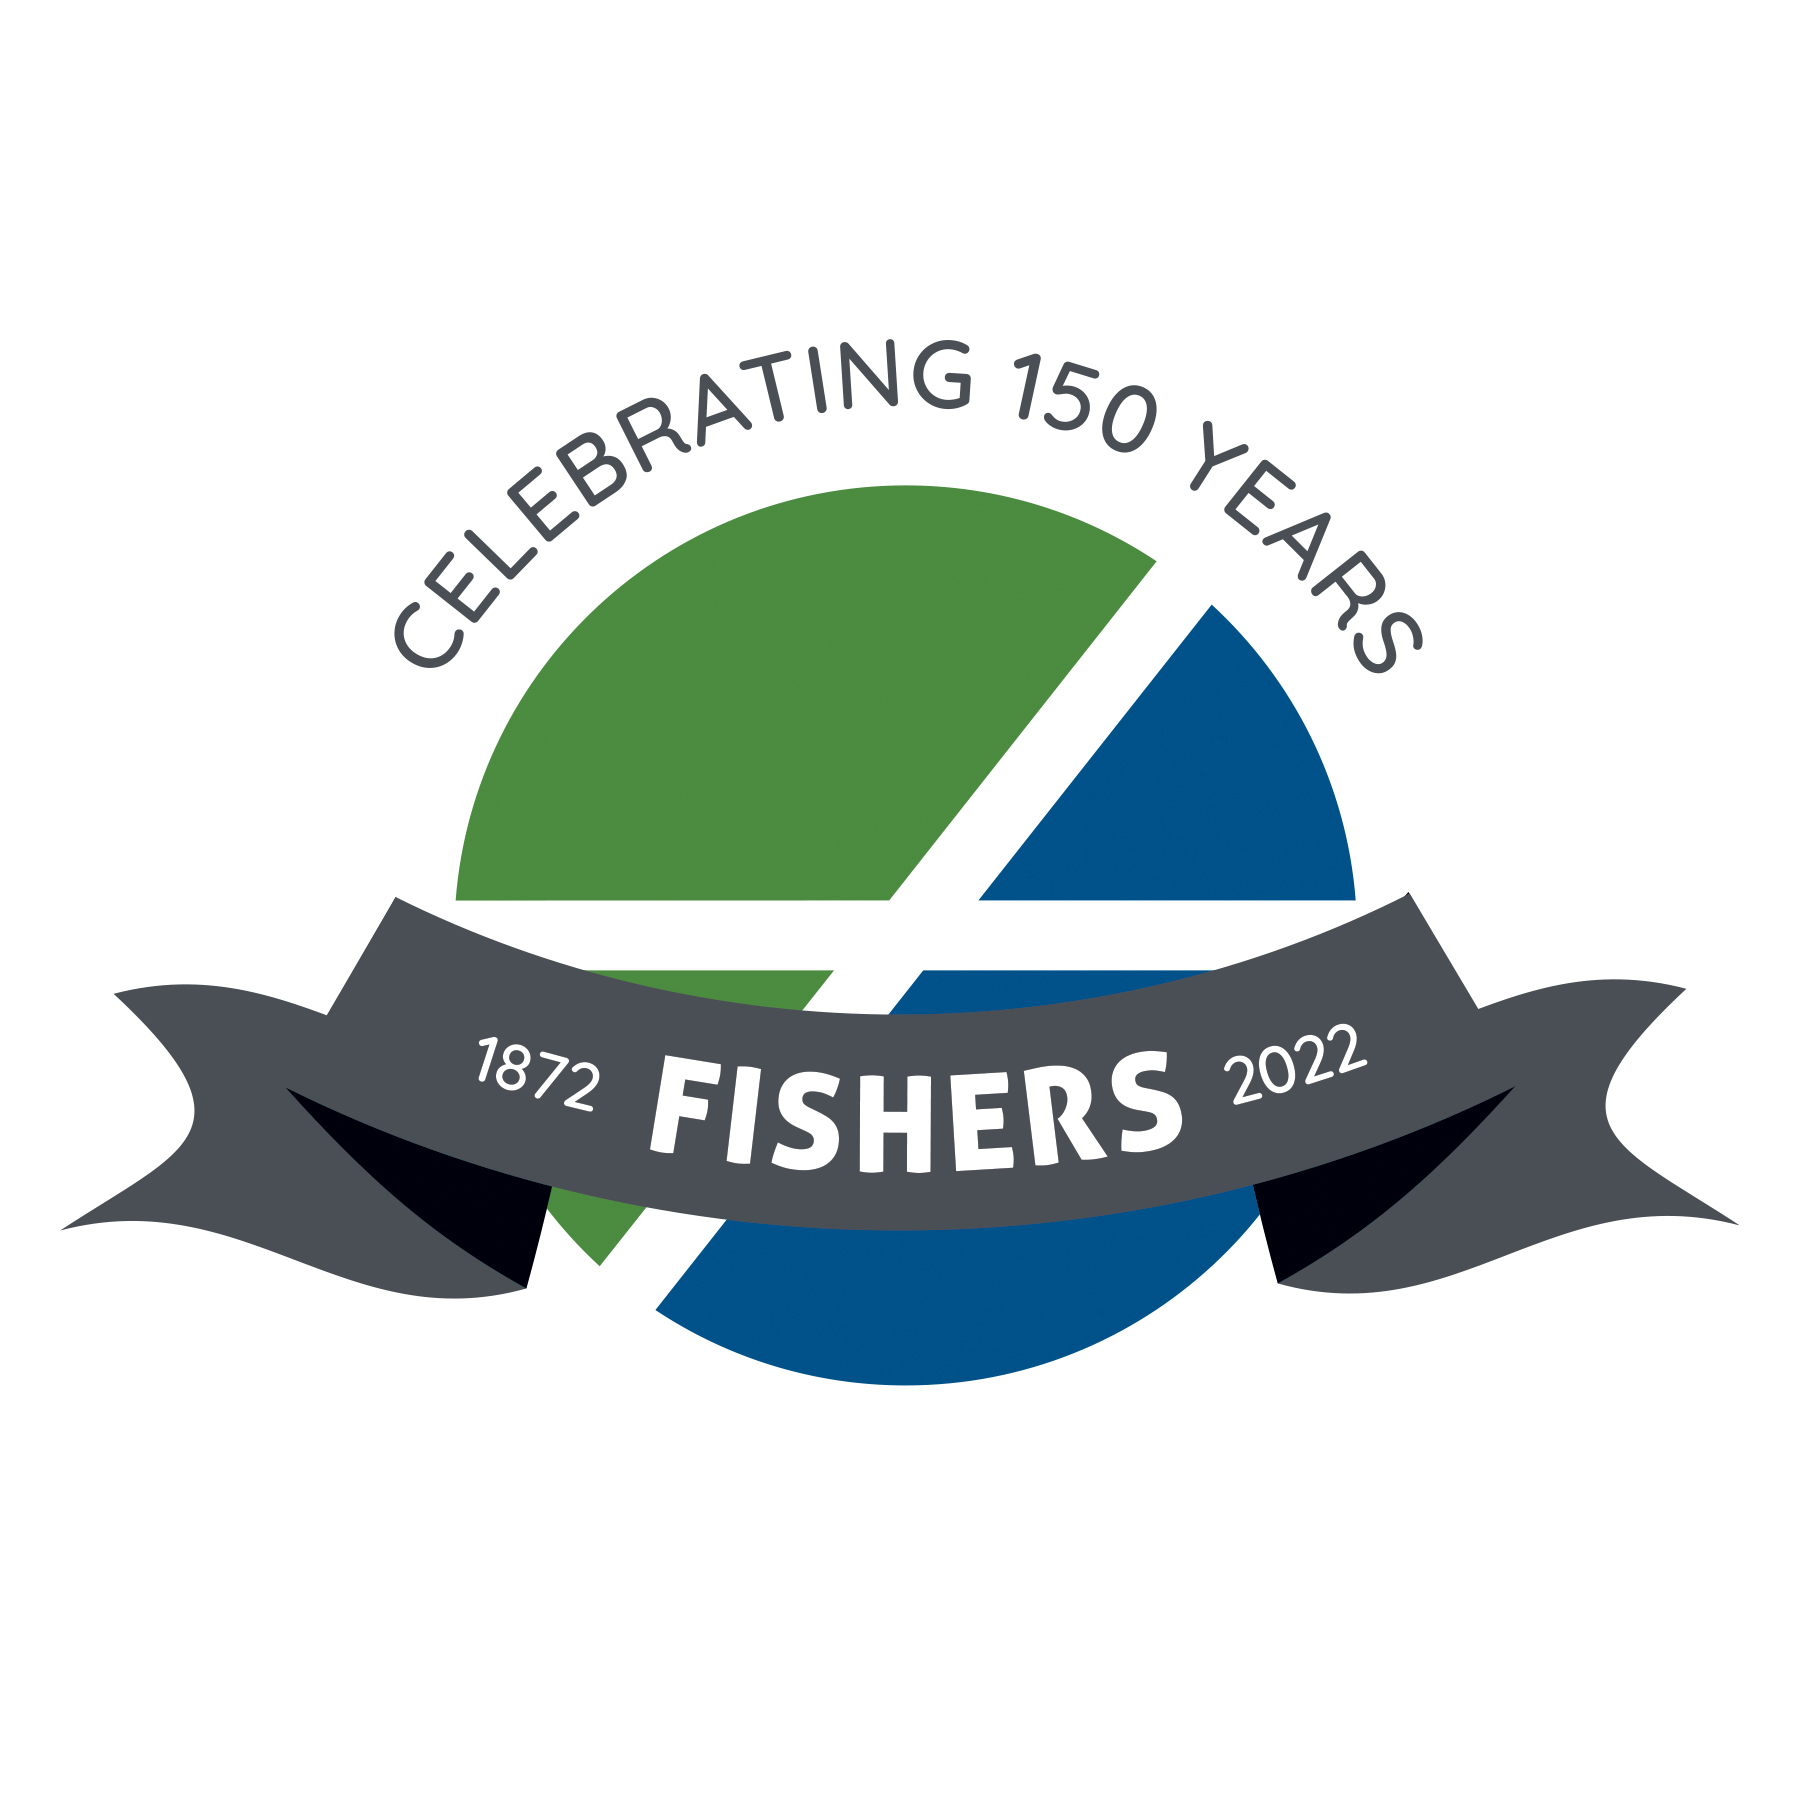 Celebrating 150 Years 1872 Fishers 2022